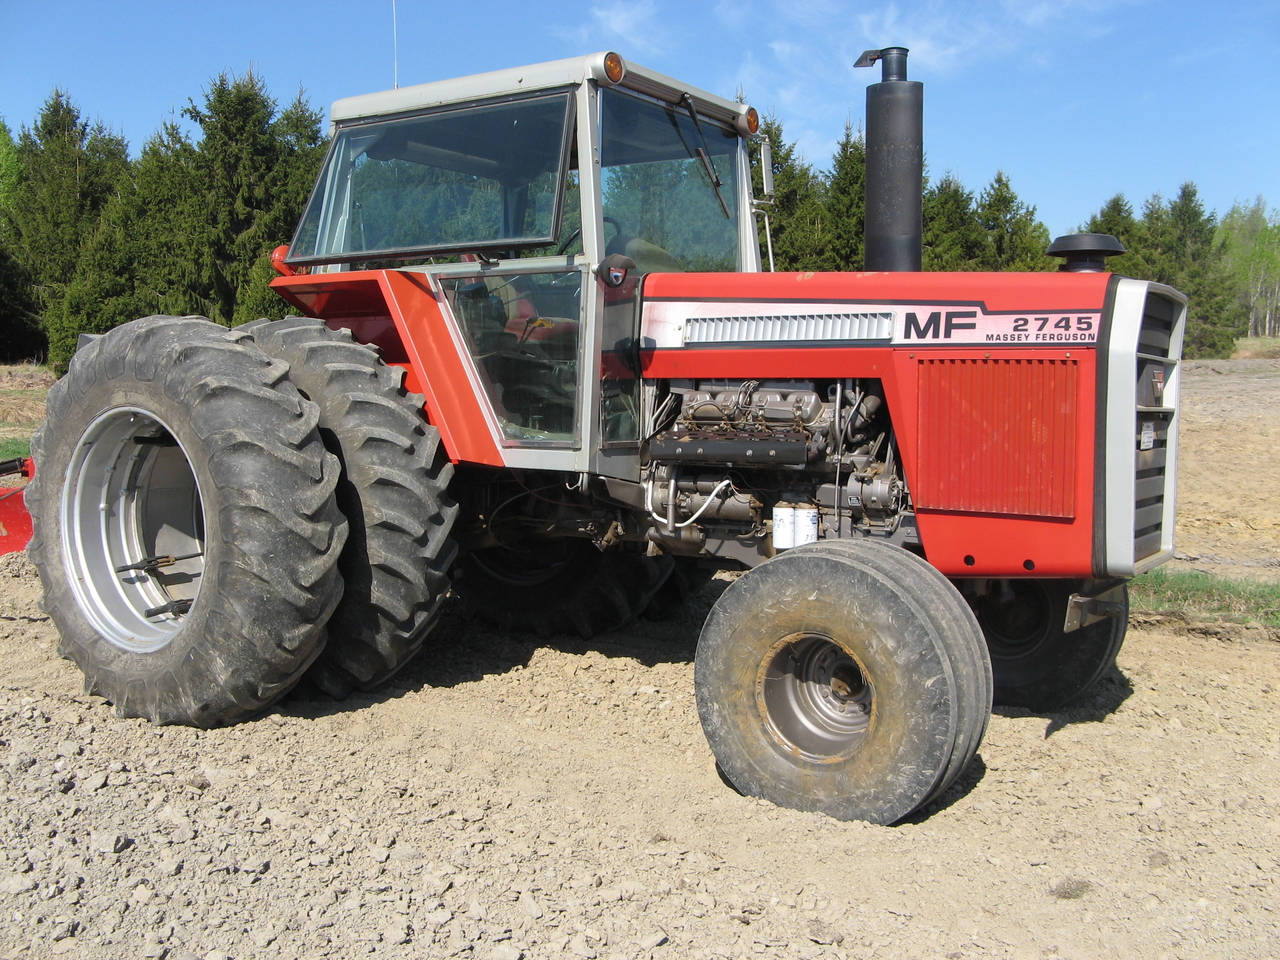 Pin 2745-massey-ferguson-tractor on Pinterest